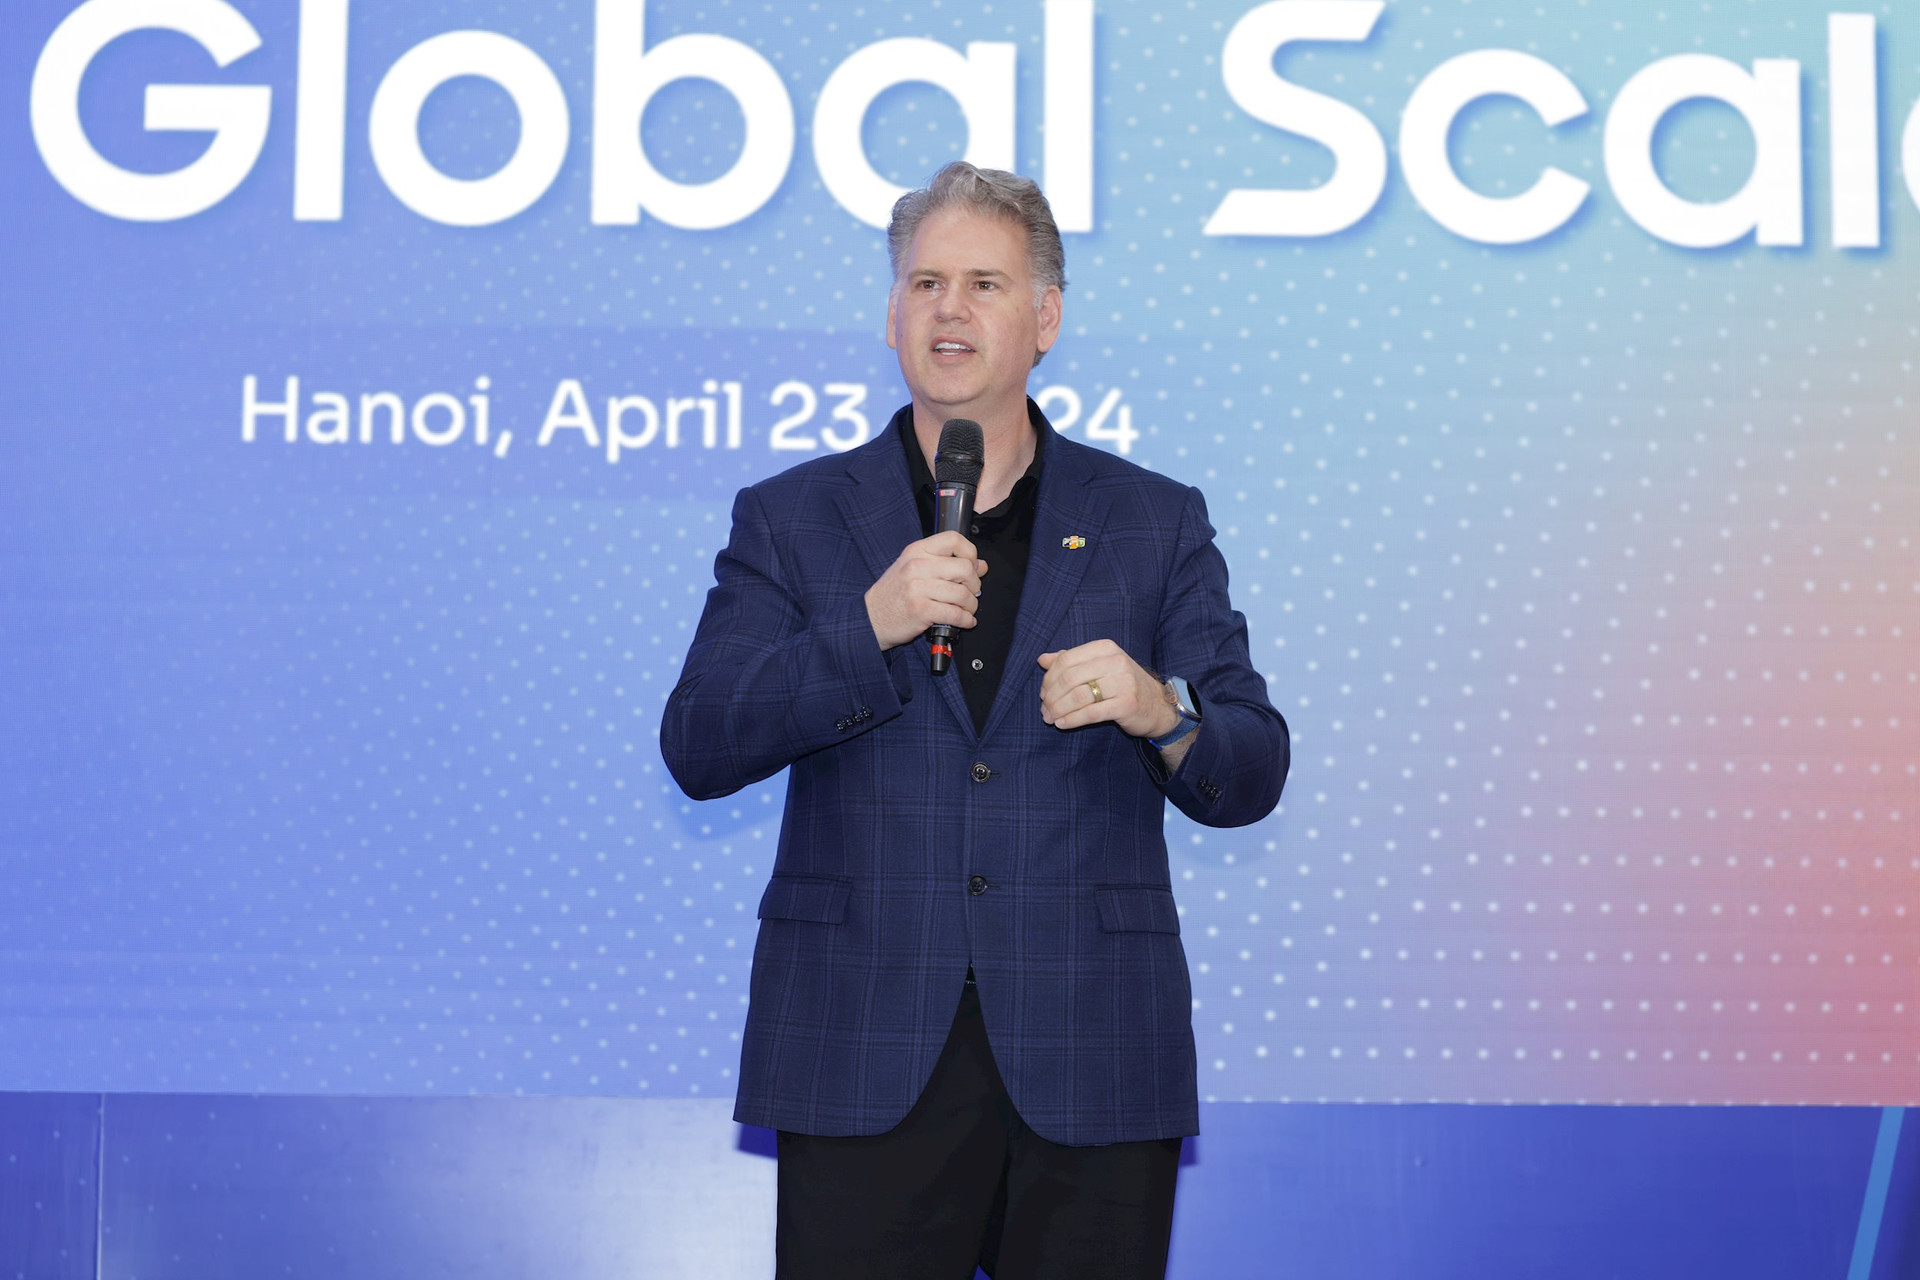 Mr Keith Strier, Vice President of NVIDIA’s Global AI Initiative